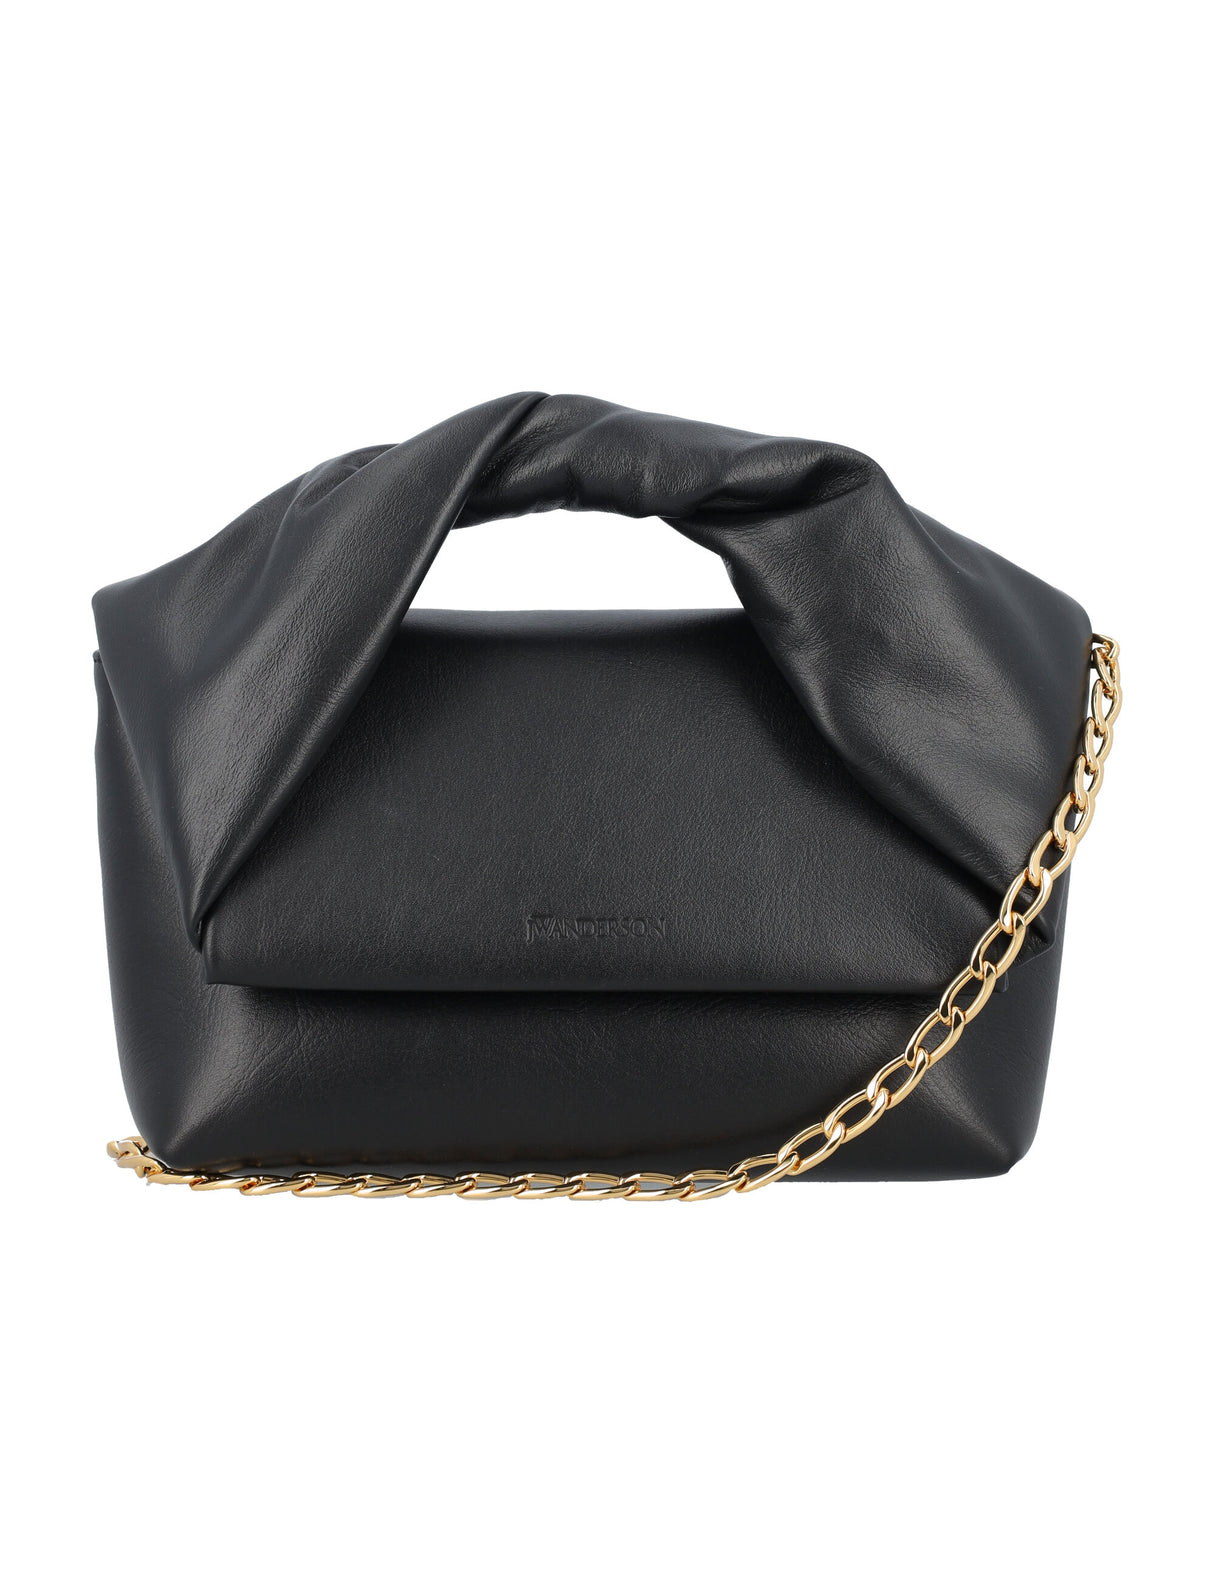 JW ANDERSON Smooth Leather Medium Twister Handbag with Gold Chain and Twisted Handle - Versatile Clutch, Shoulder, & Crossbody Bag - Black - 17cm x 29cm x 5cm